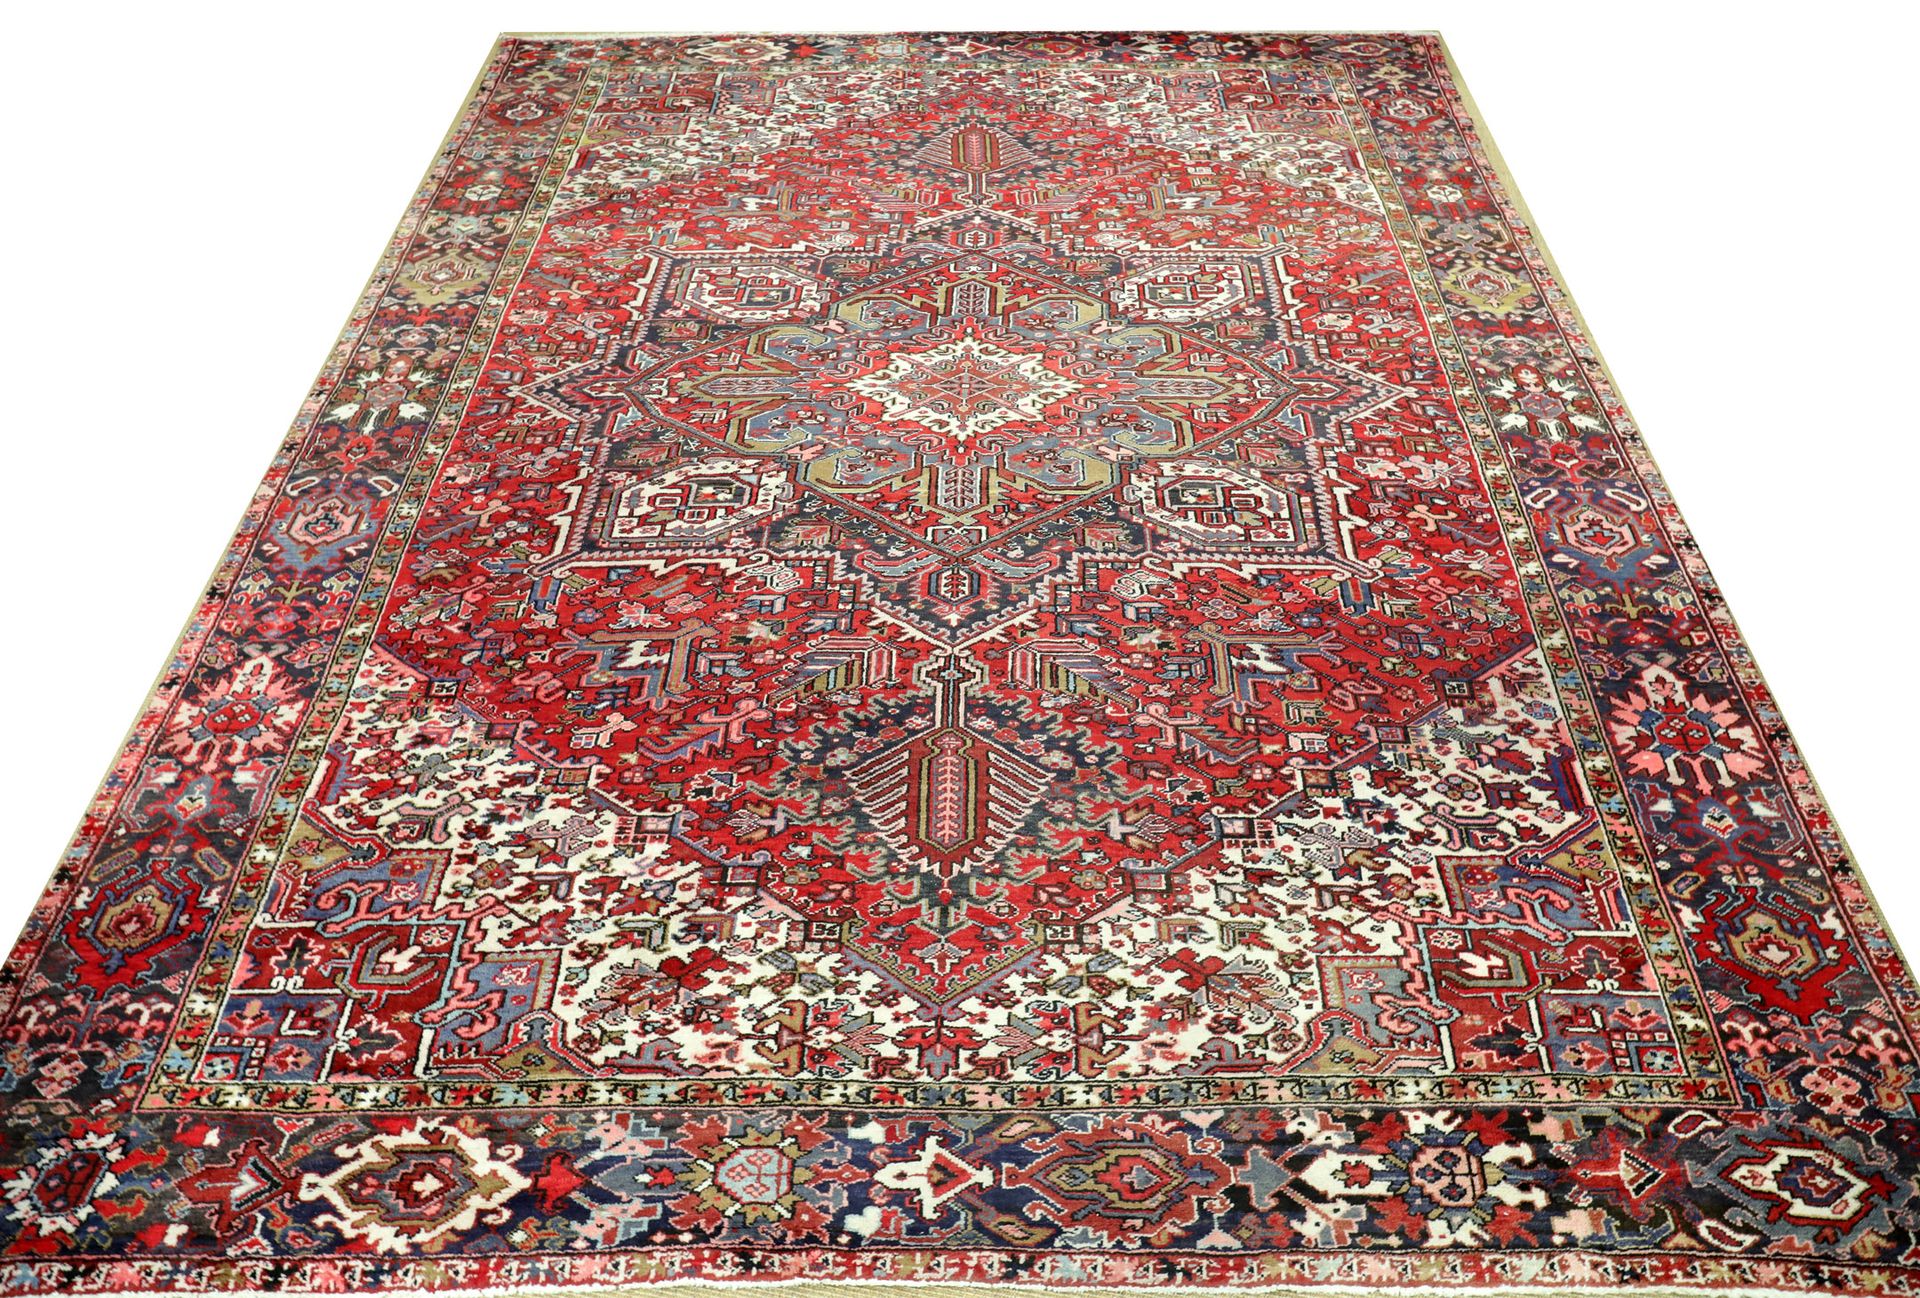 Null 重要的手工打结羊毛地毯，砖红色背景和风格化的装饰

现代工作

405 x 317 厘米

使用和维护的条件